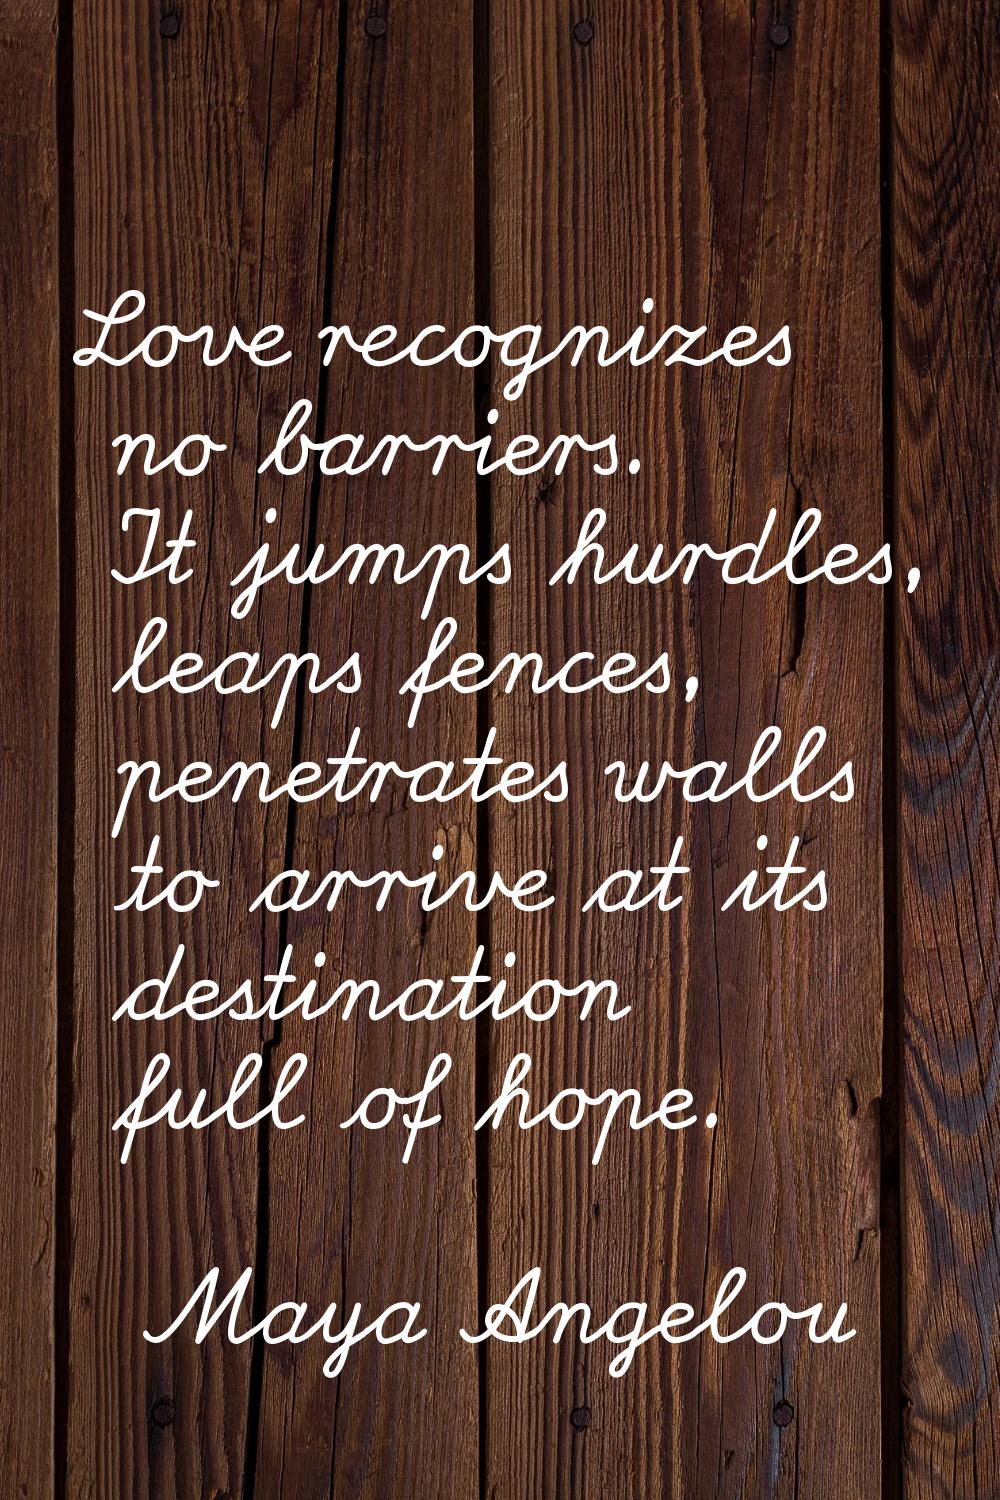 Love recognizes no barriers. It jumps hurdles, leaps fences, penetrates walls to arrive at its dest